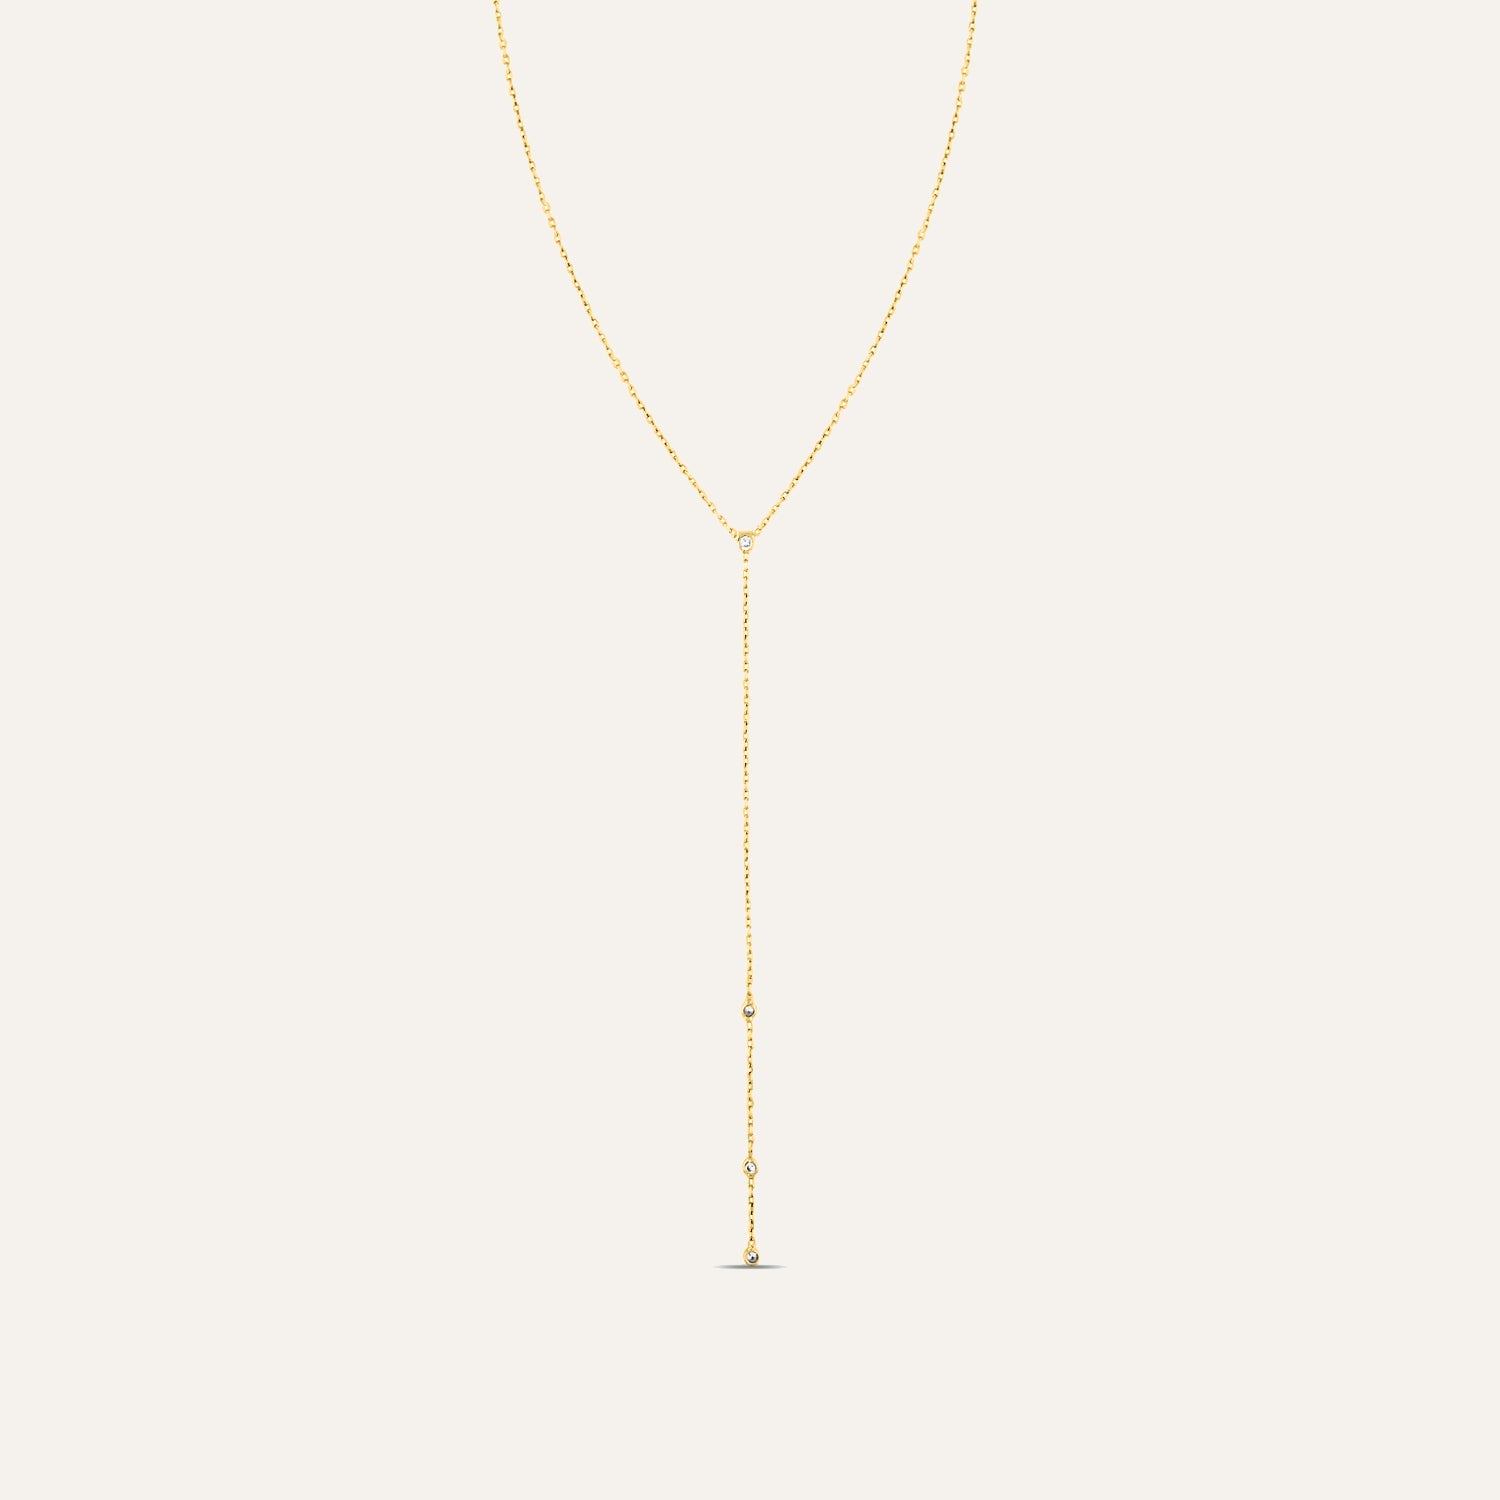 necklaces for women - Stellar Cascade